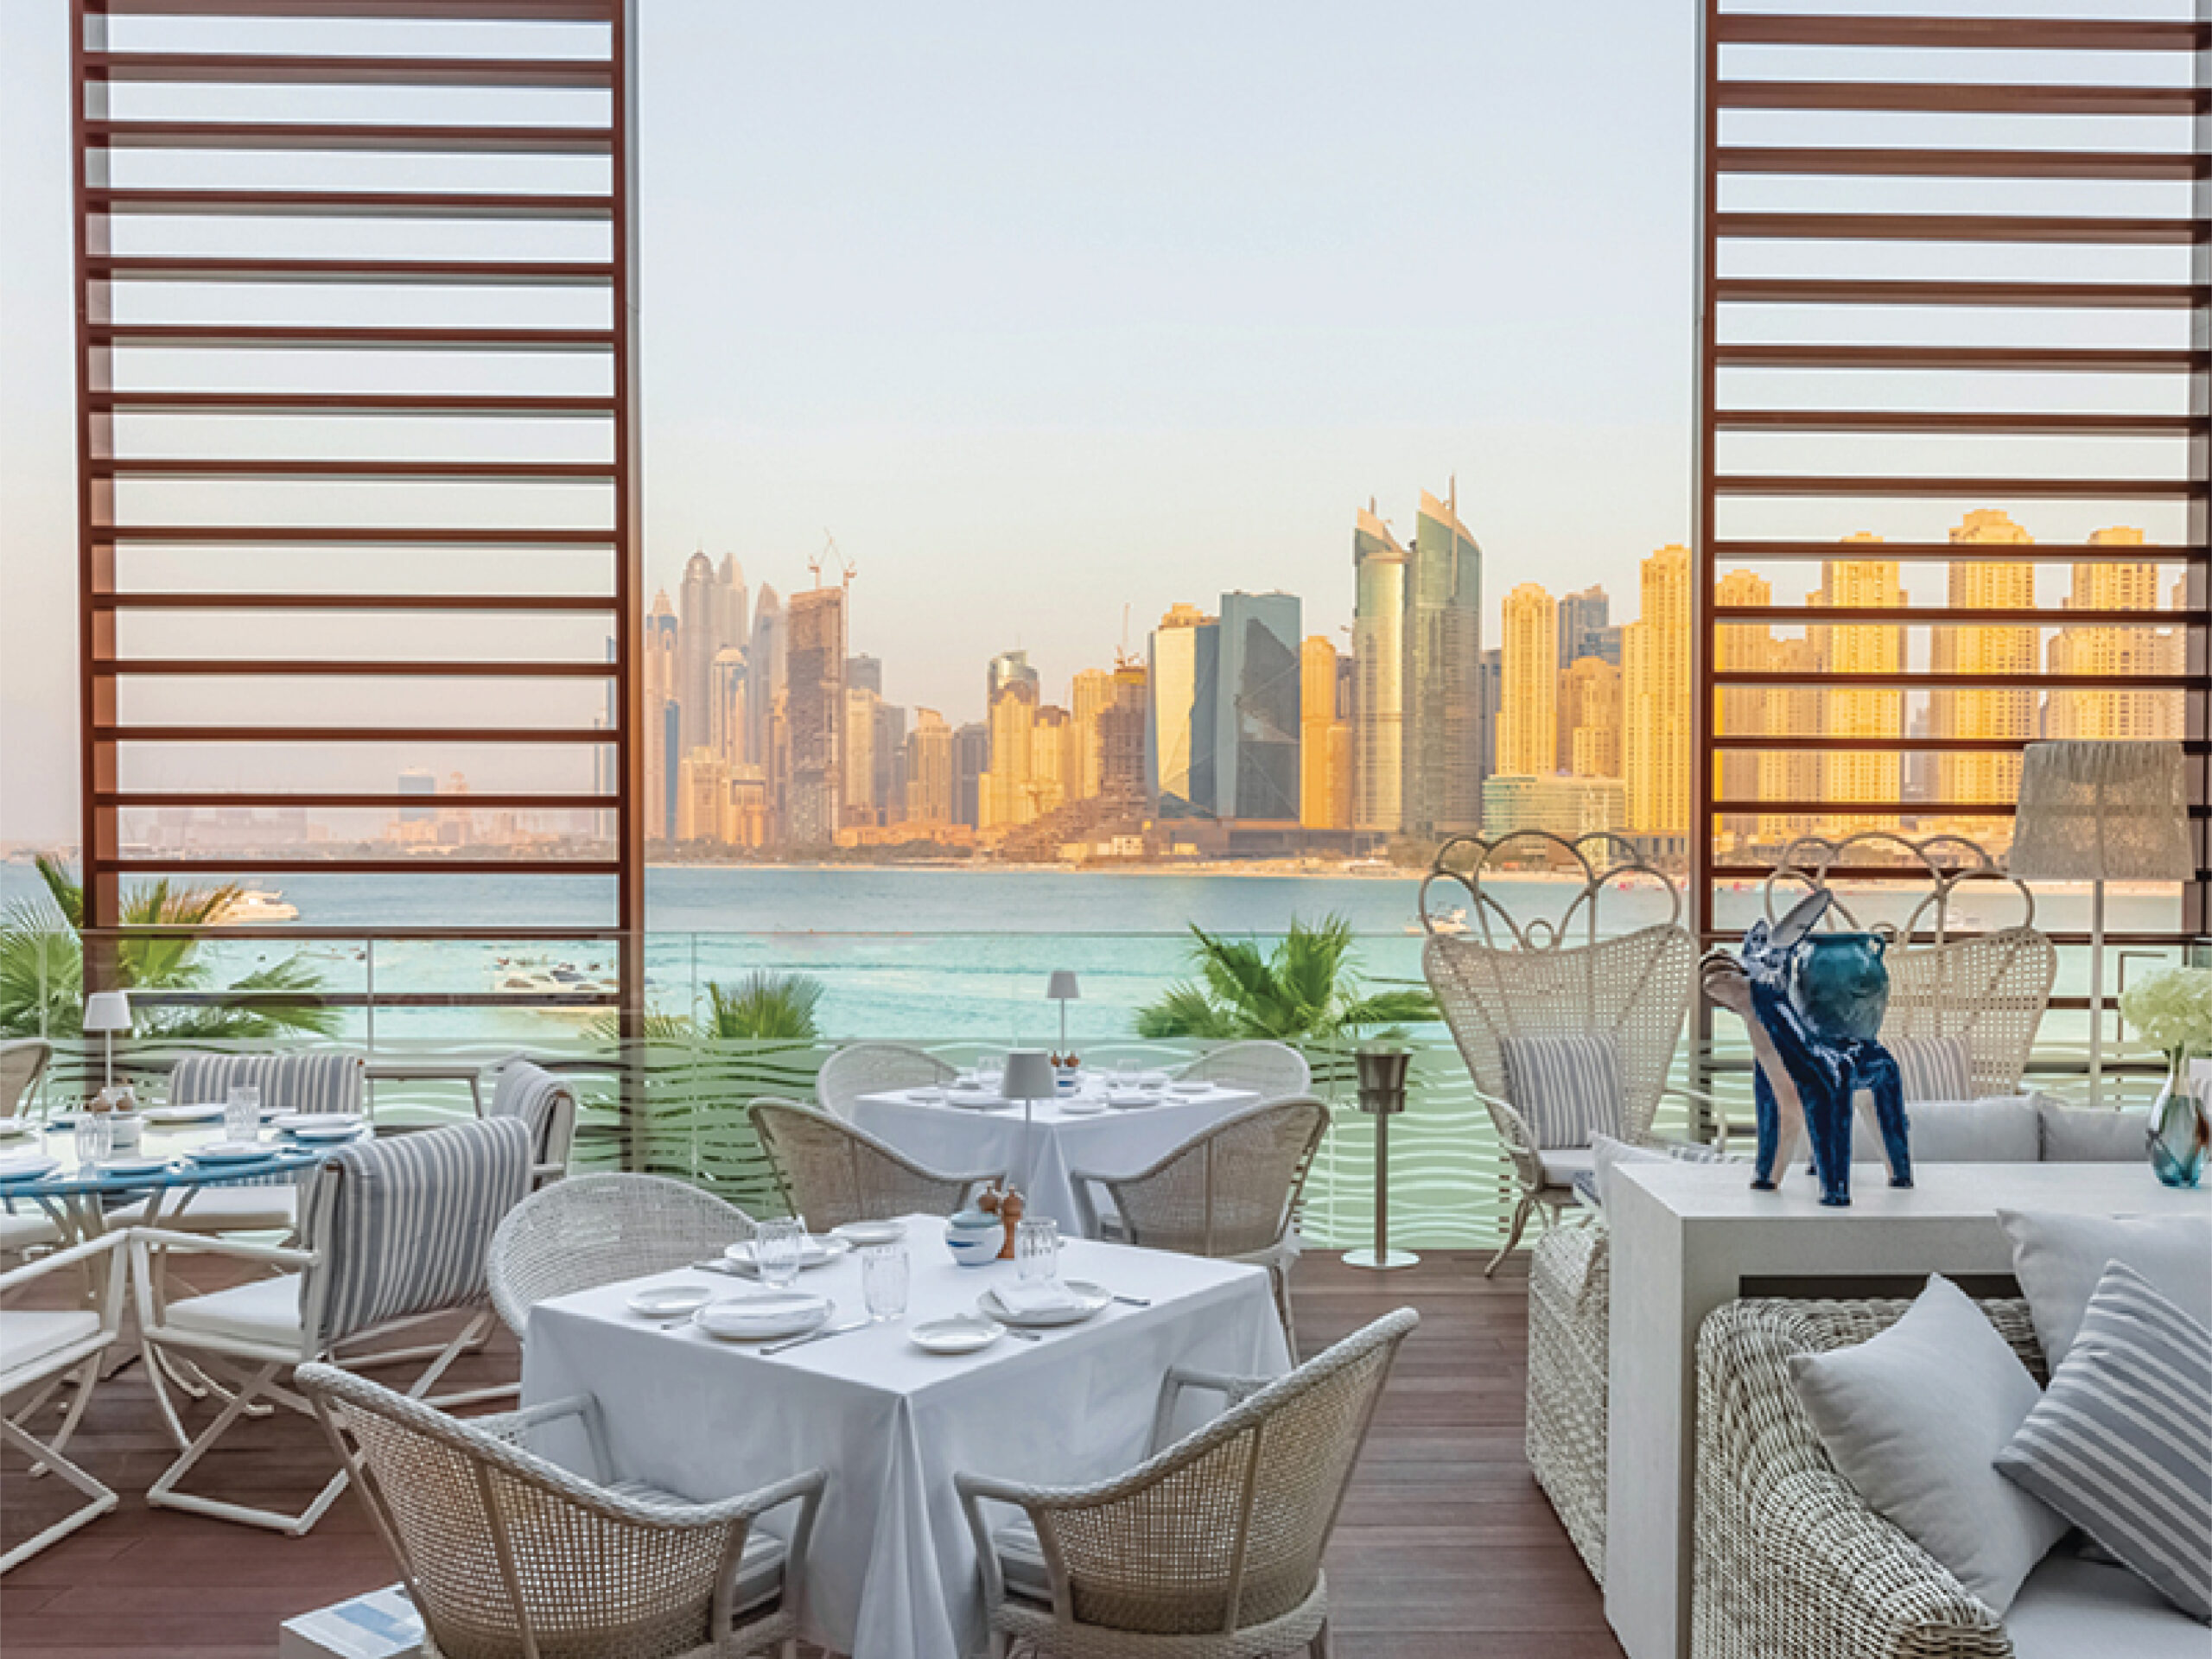 Dubai Restaurants that every food lover must visit